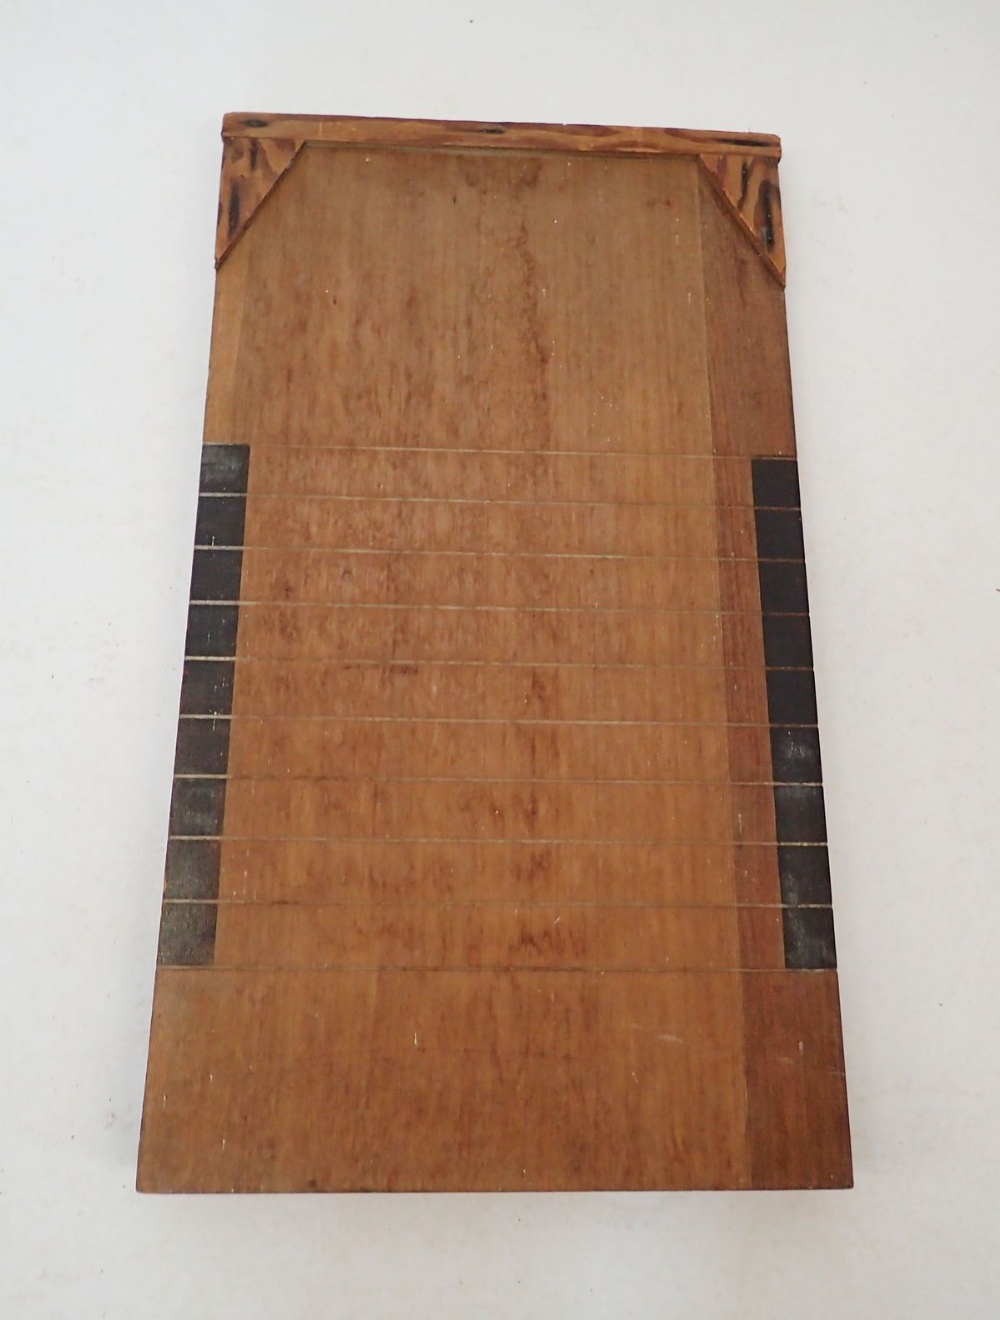 An old Shove happeny board